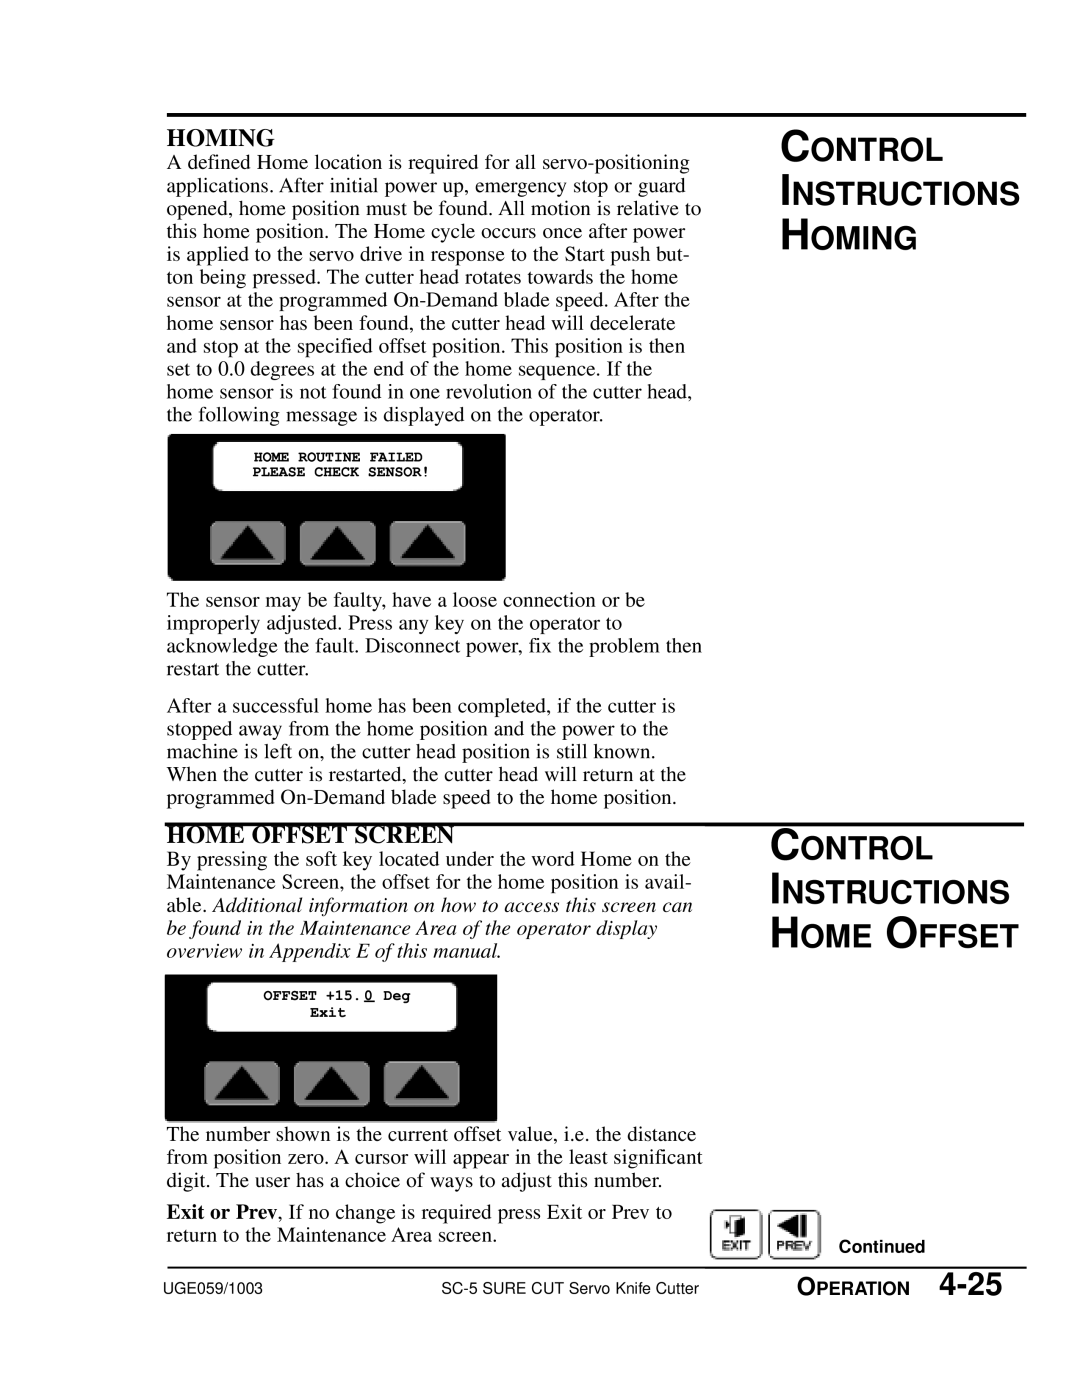 Conair SC-5 manual Control Instructions Homing, Control Instructions Home Offset, Home Offset Screen 